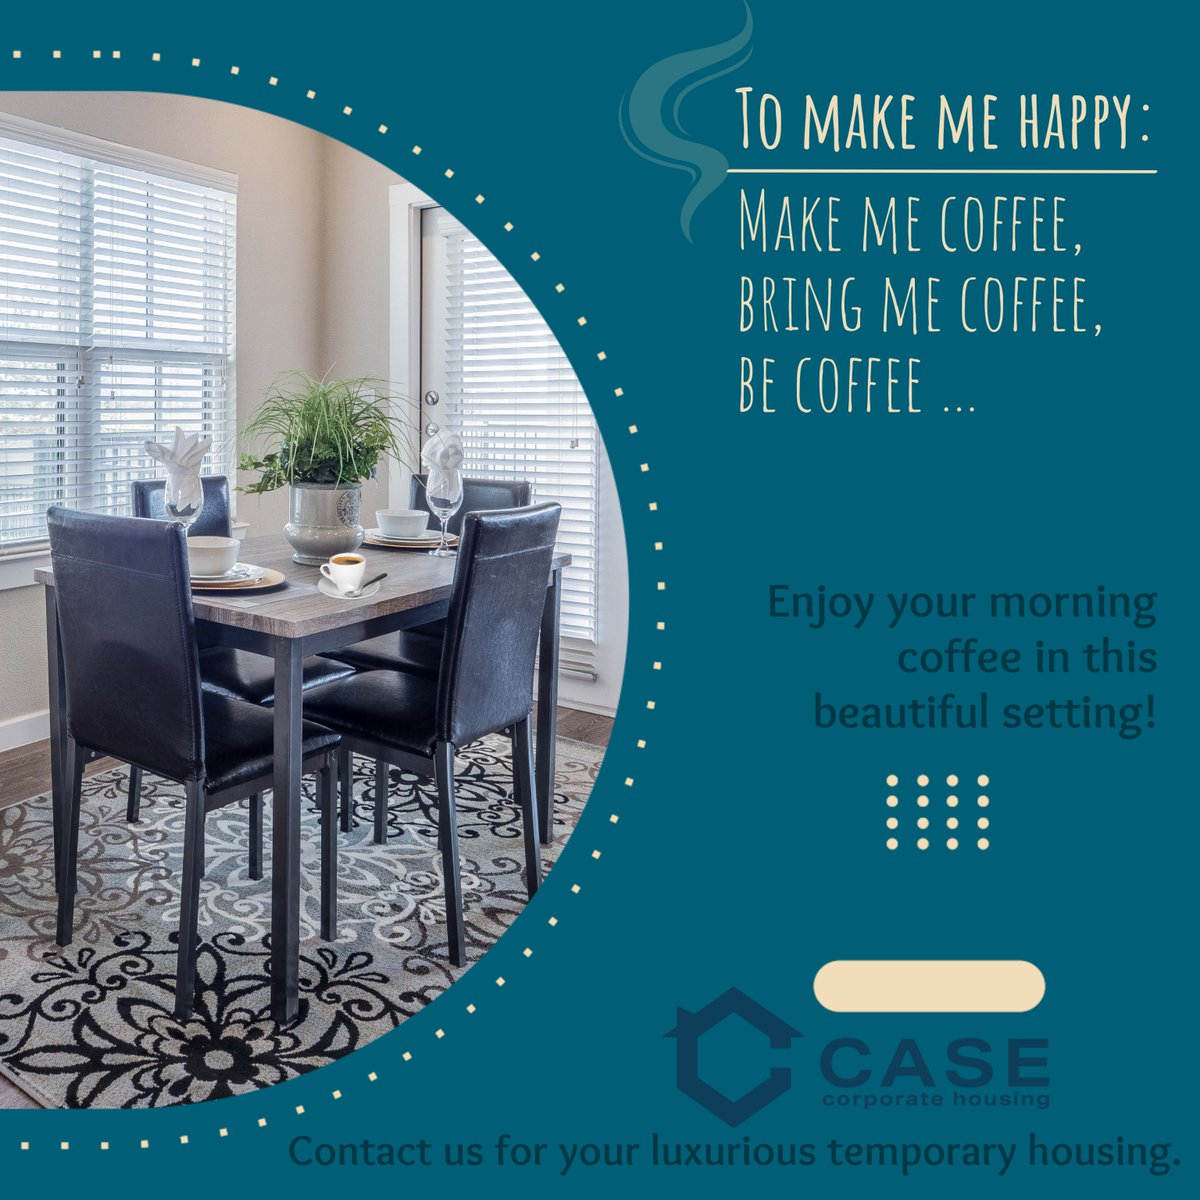 Enjoy your morning coffee! 
#CorporateLife #CorporateHousing #MorningCoffee #WorkLifeBalance #BusinessTravel #CorporateCulture  #HomeAwayFromHome #FullyFurnished #LuxuryApartment #ShortTermRental